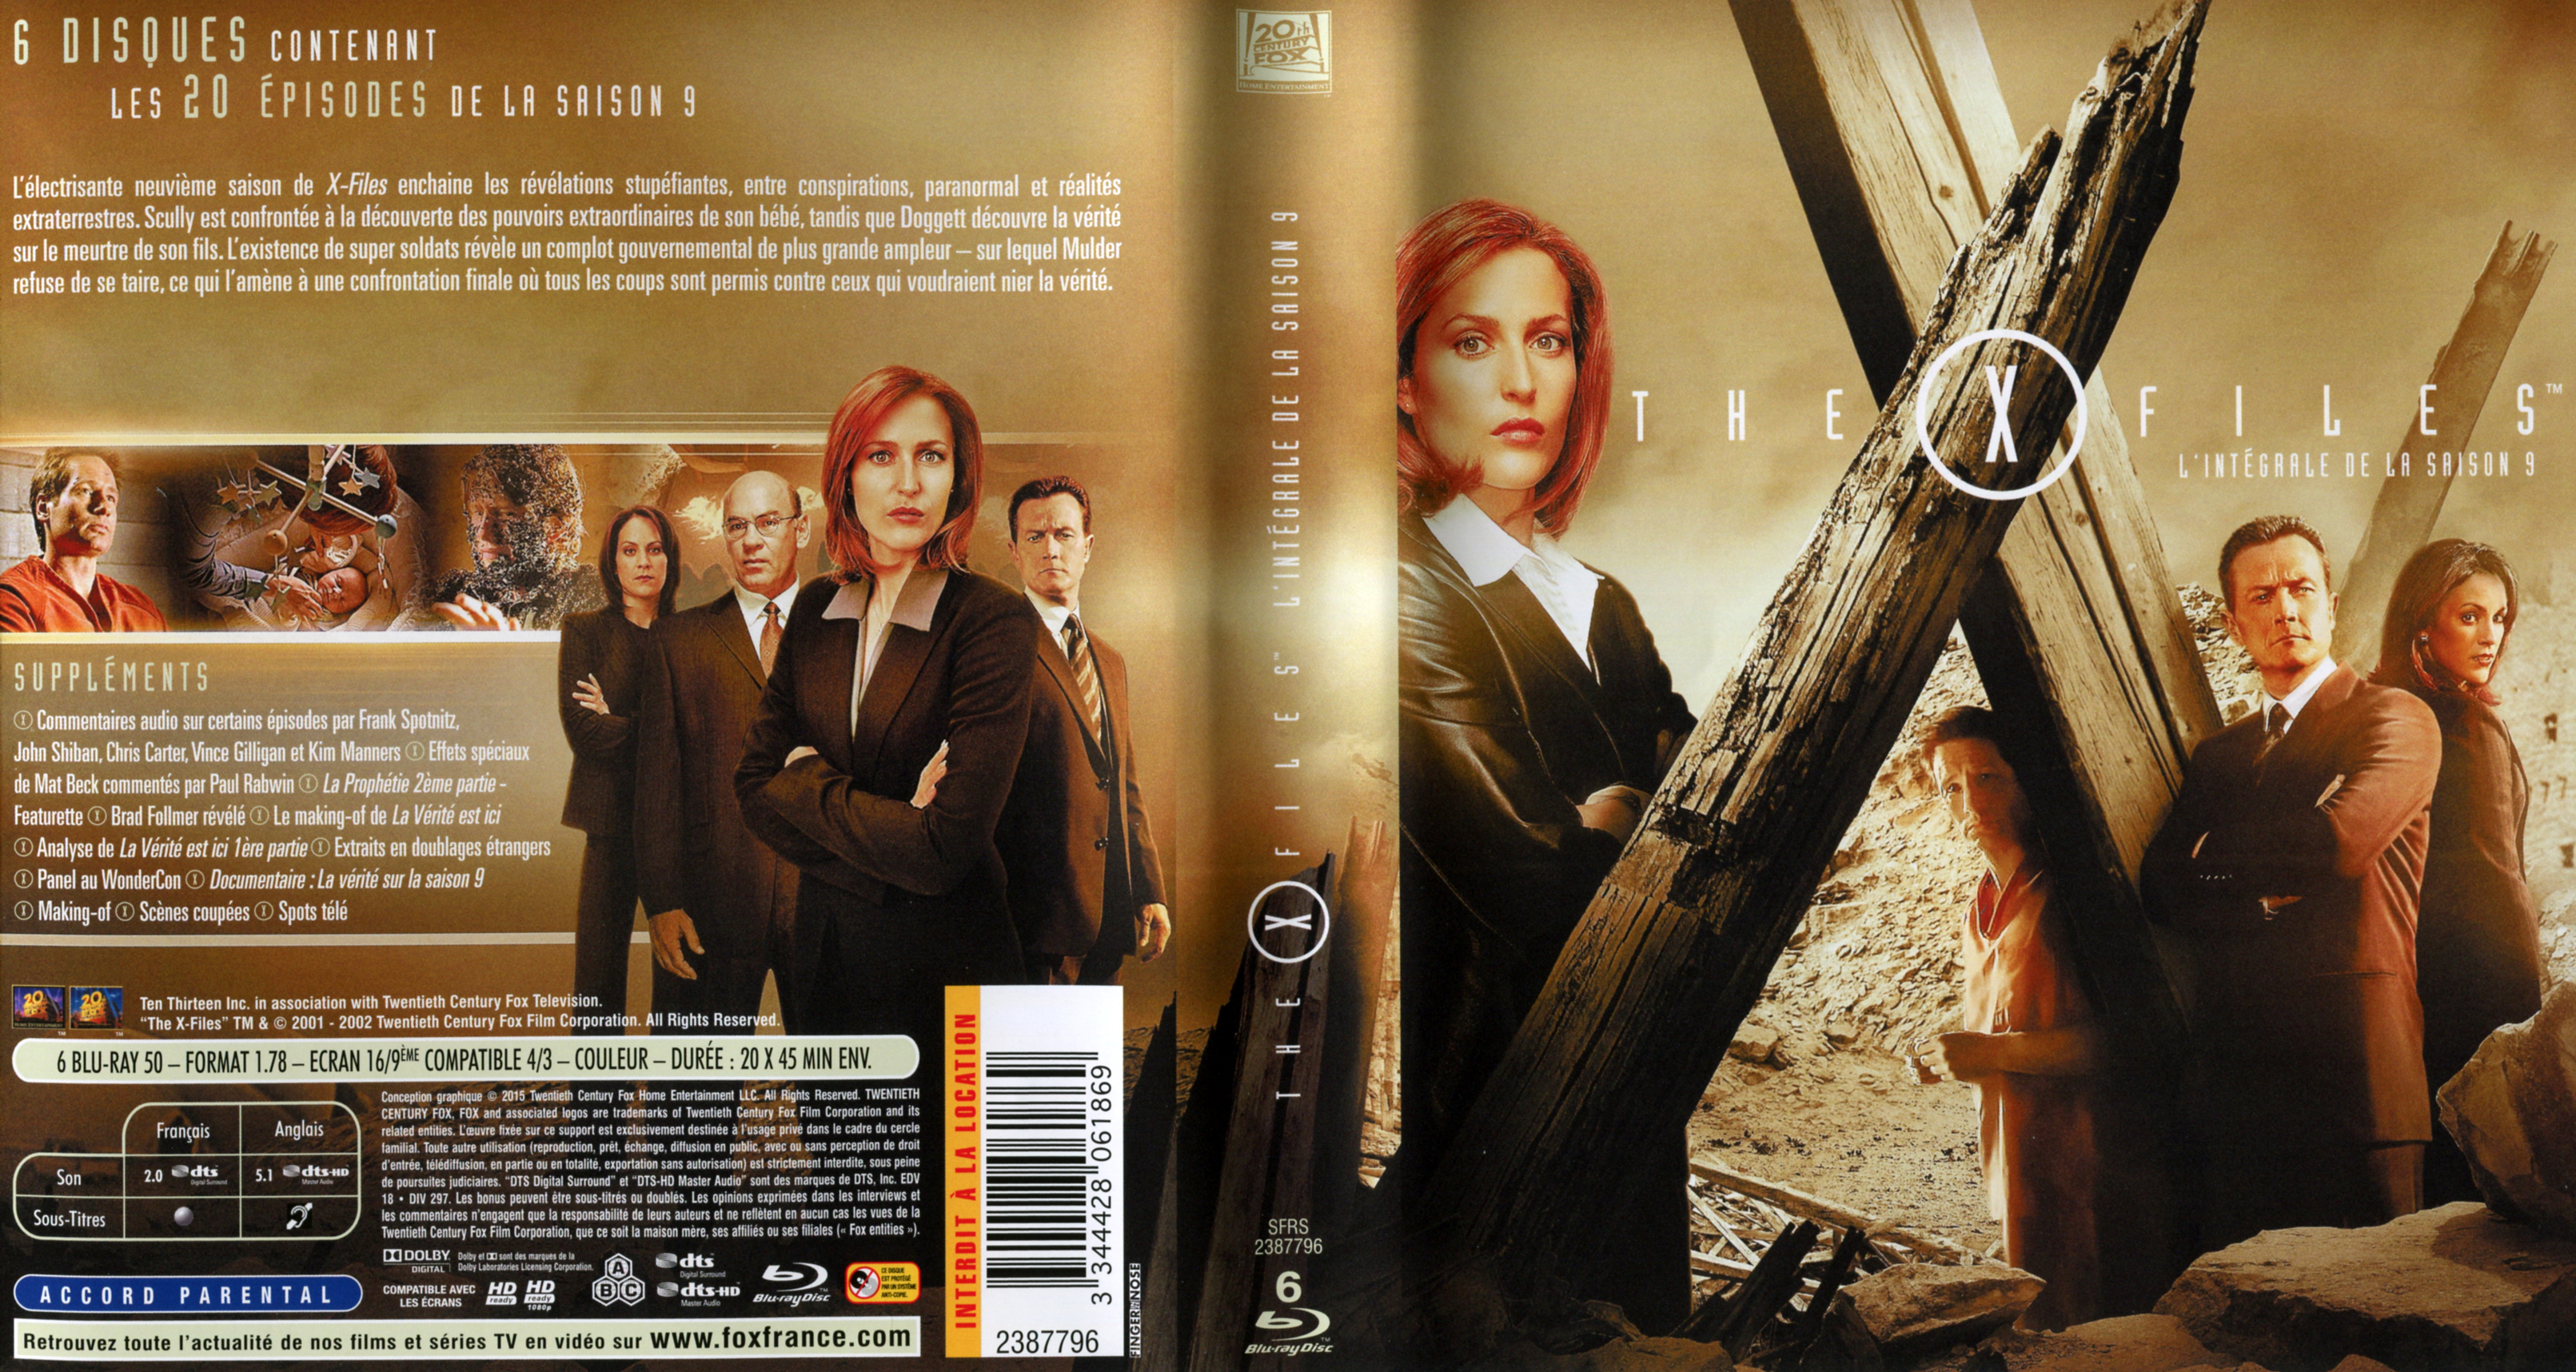 Jaquette DVD X Files saison 9 (BLU-RAY)